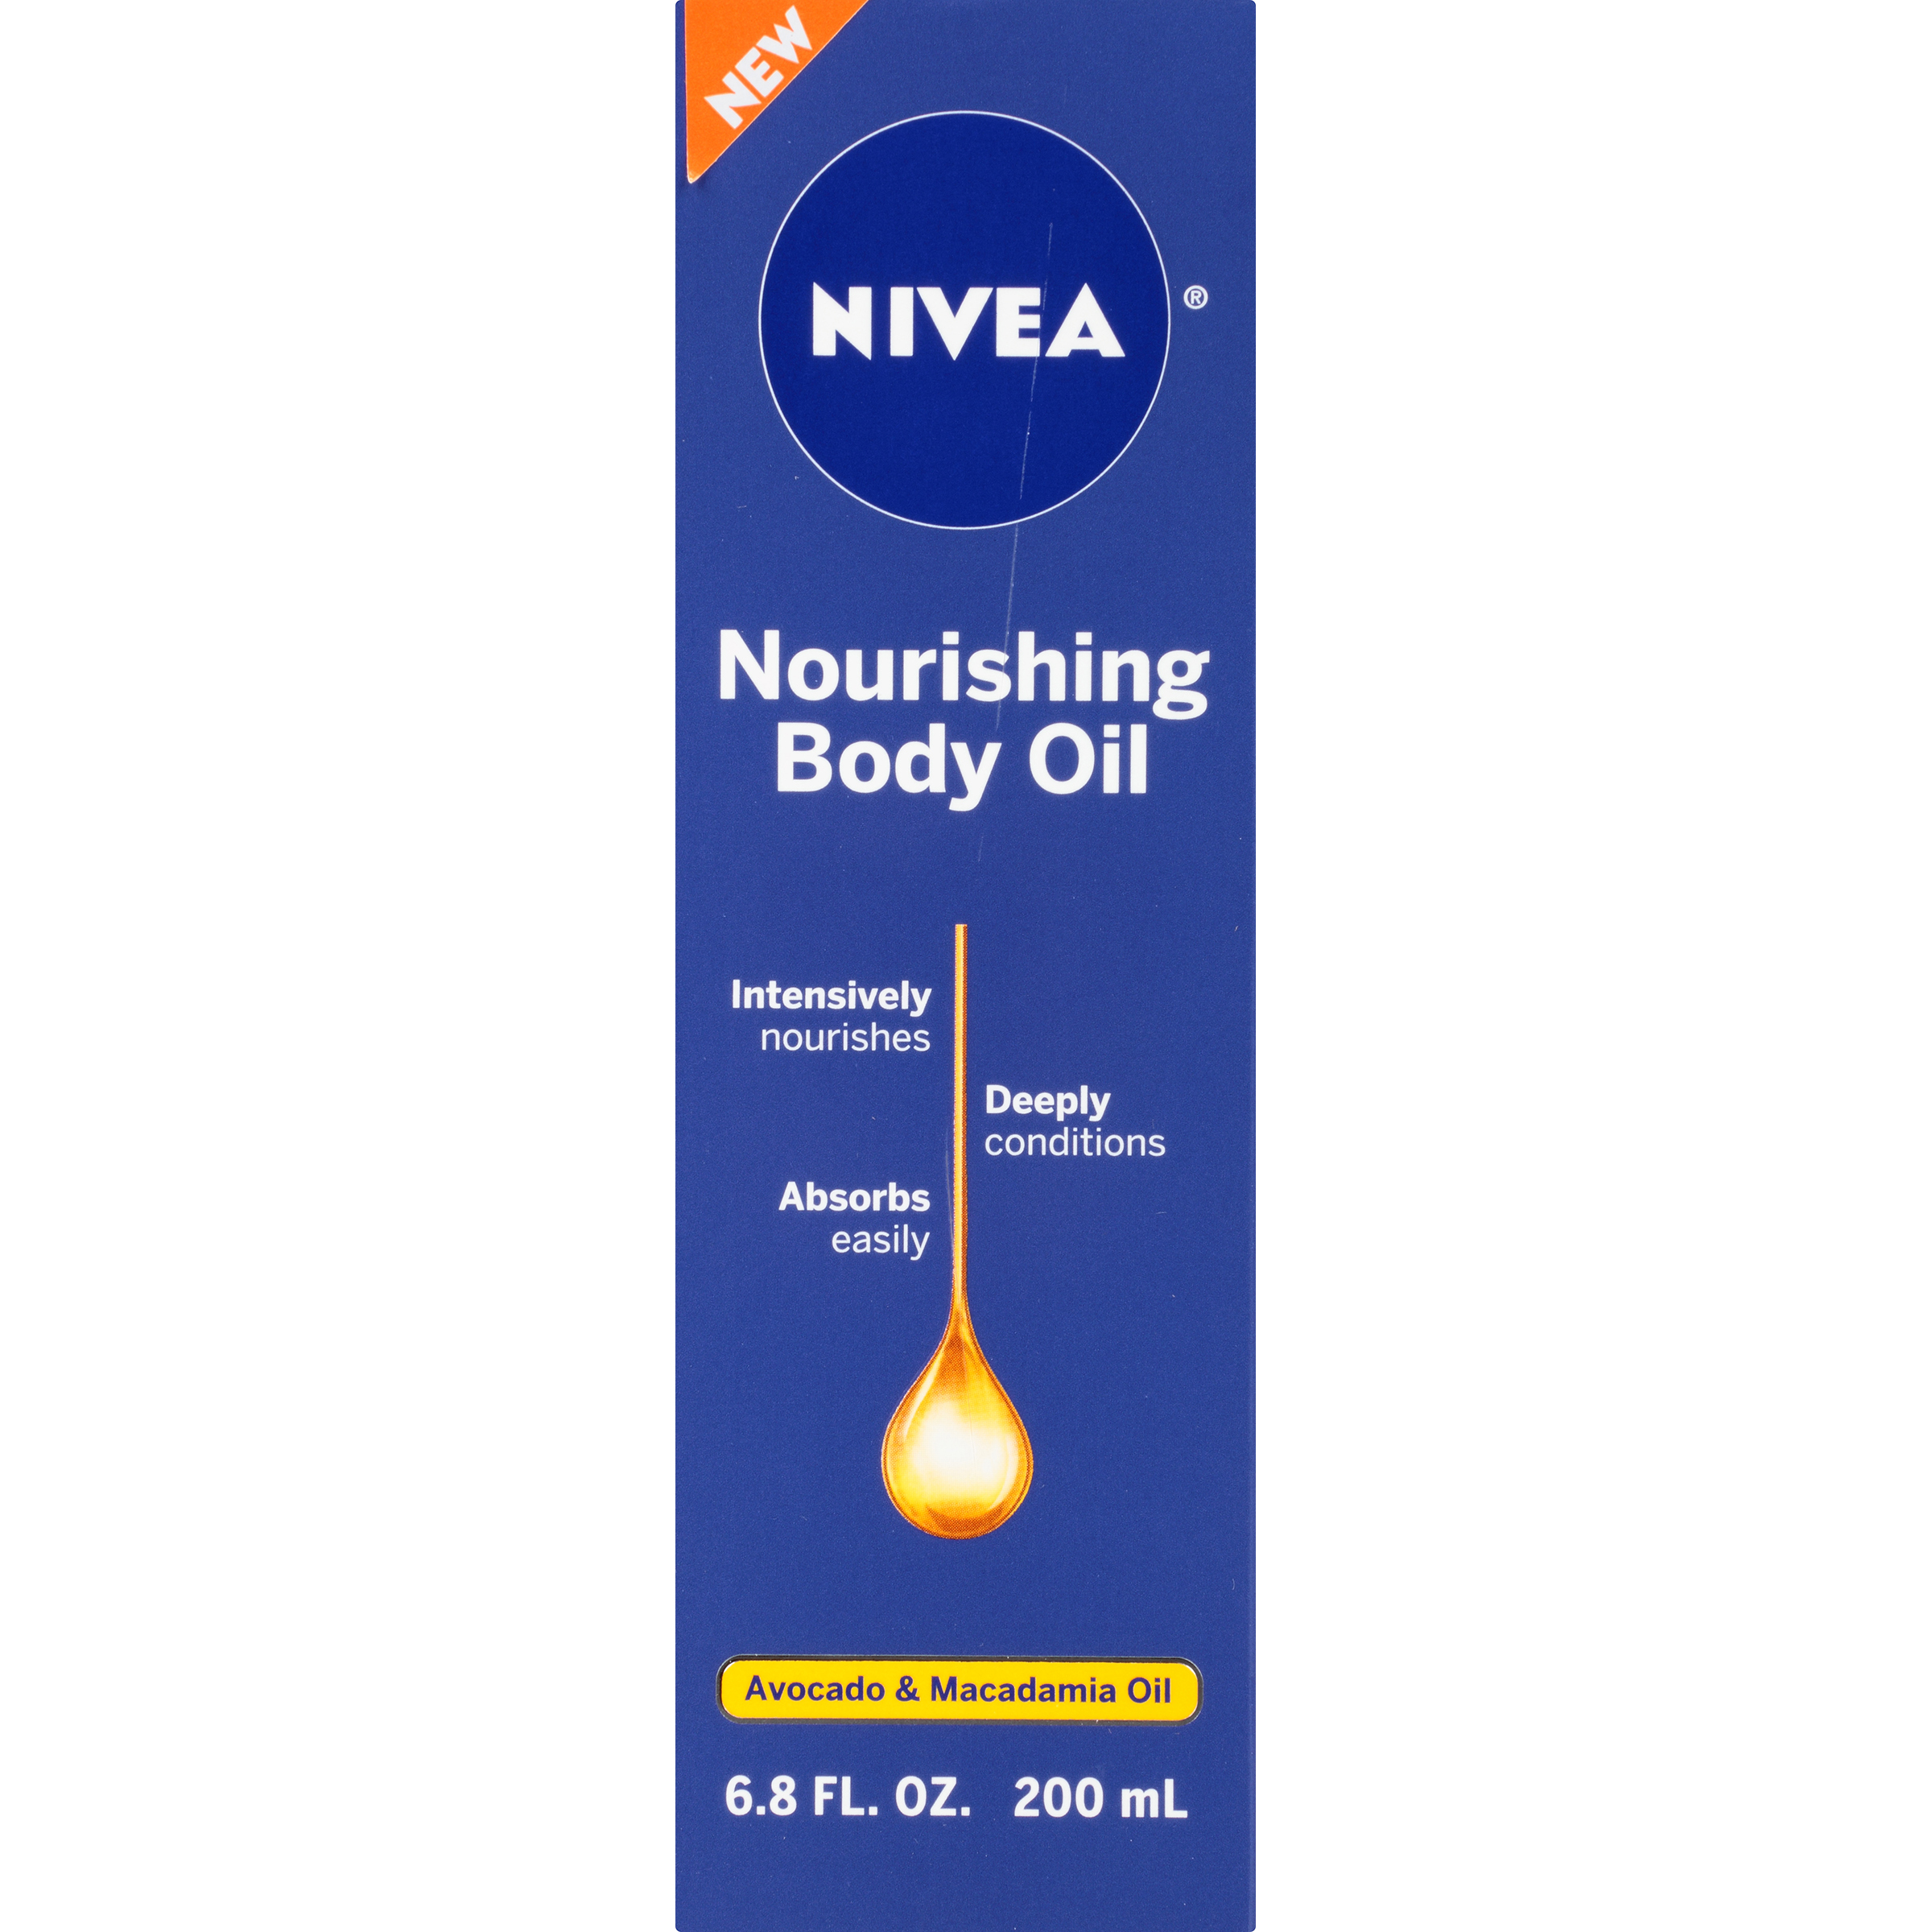 NIVEA Nourishing Body Oil 6.8 fl. oz. - image 2 of 4